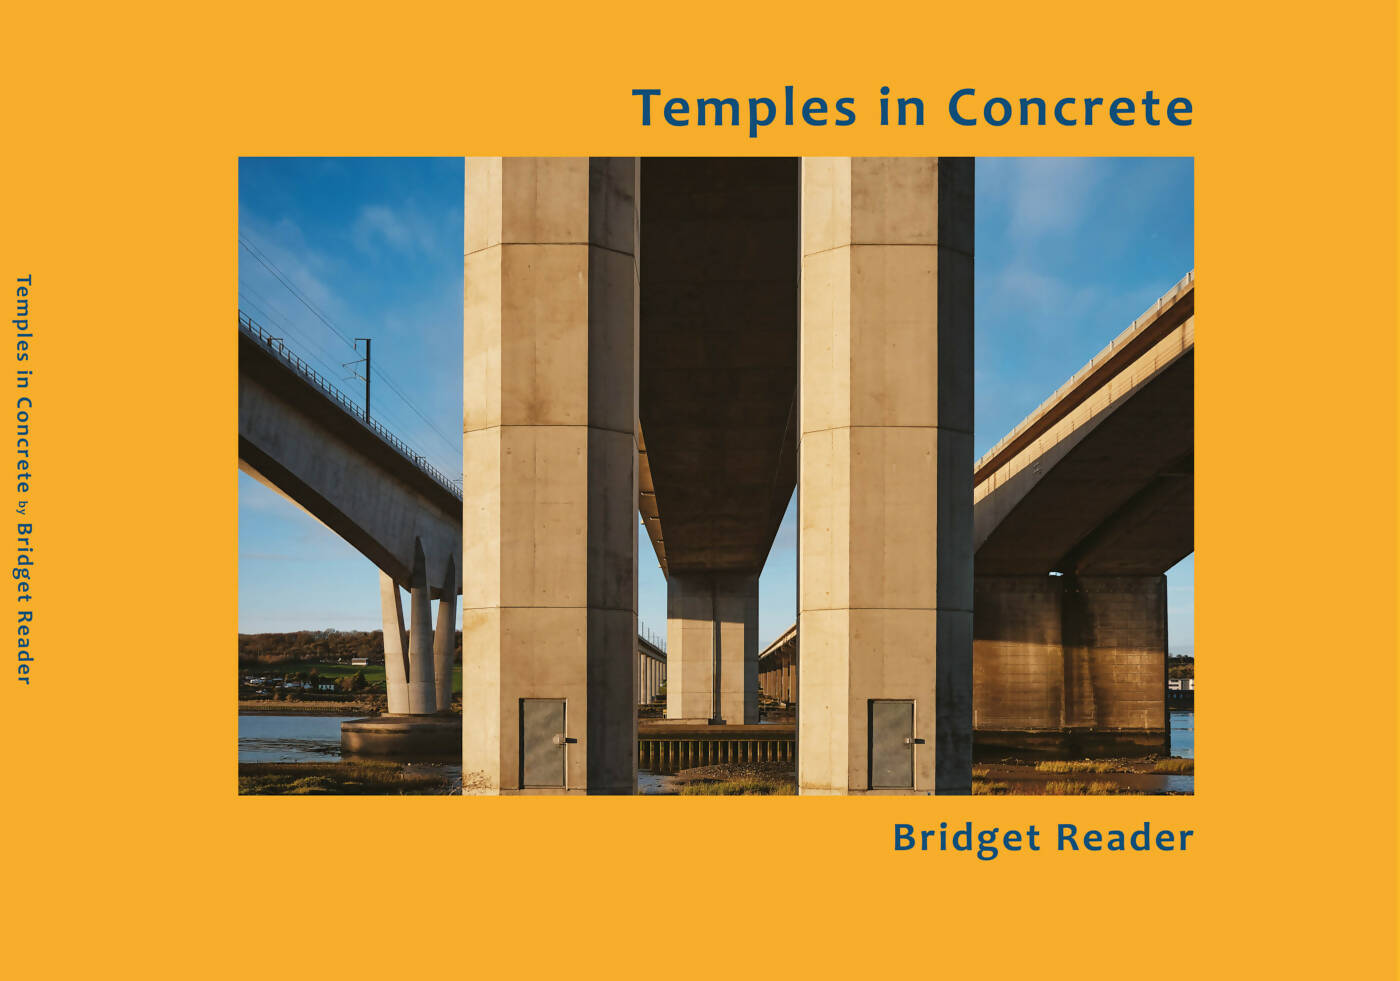 Temples in Concrete by Bridget Reader